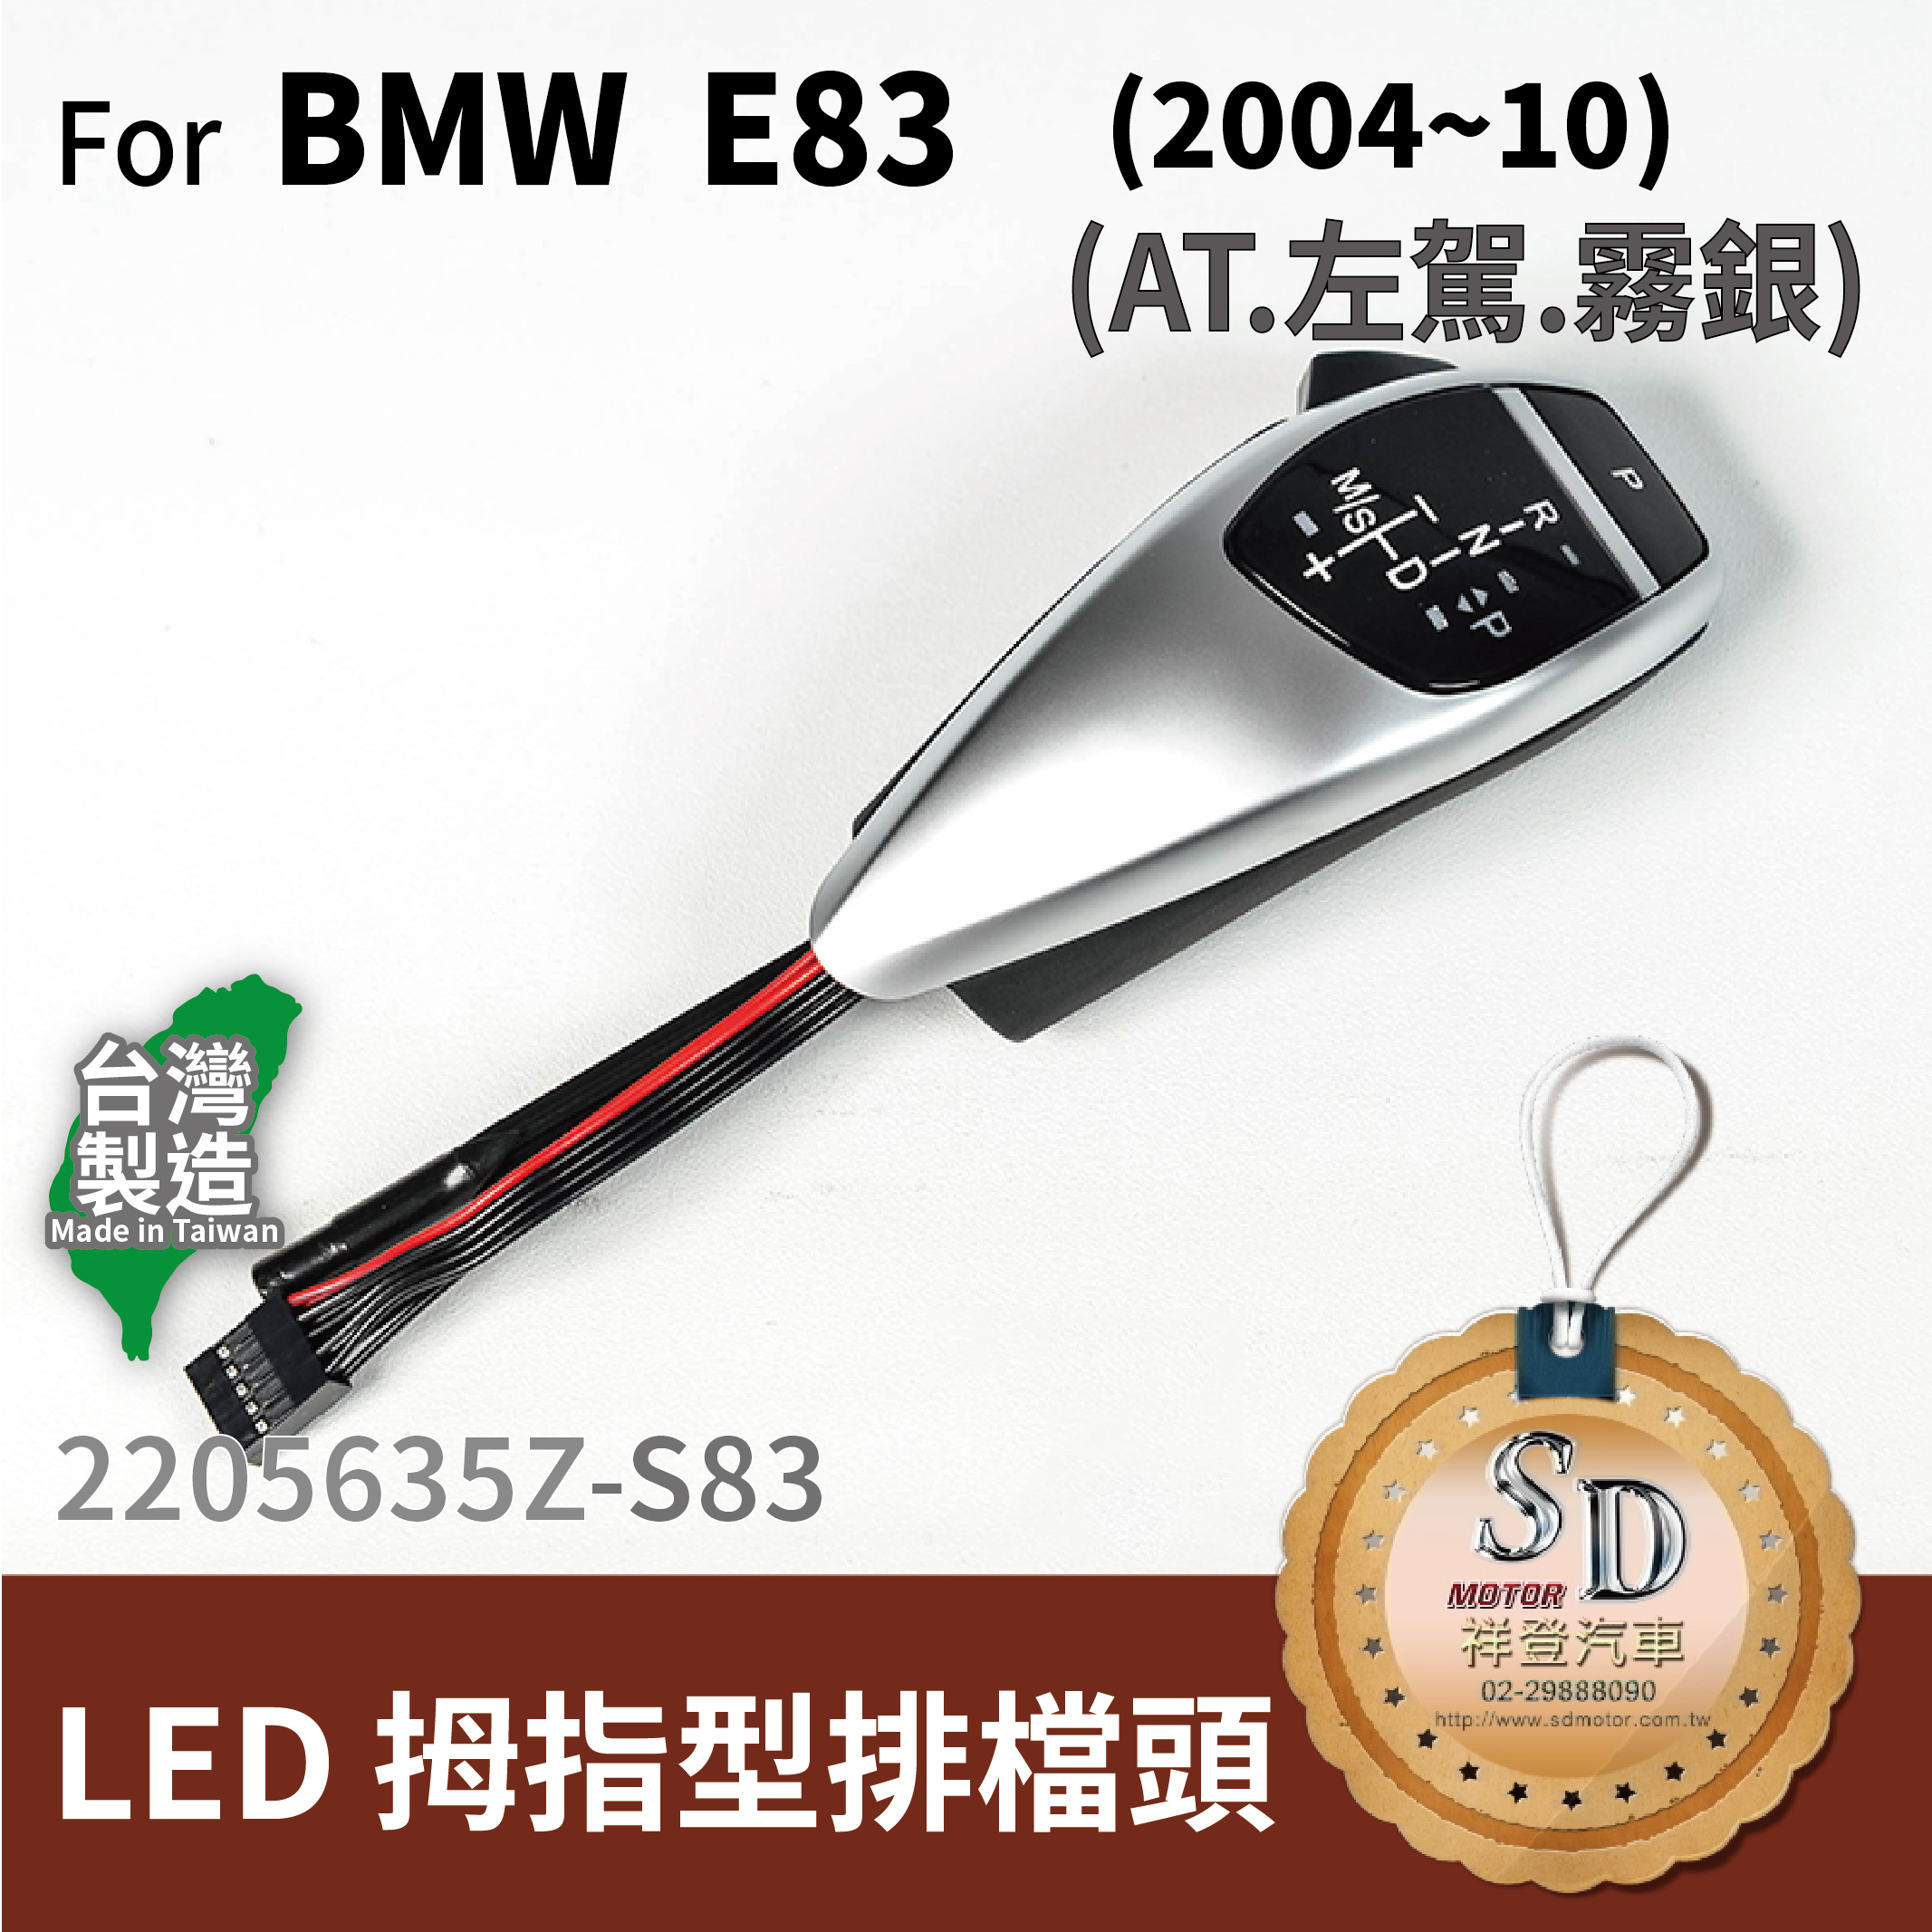 For BMW E83/E83 LCI (2004~10) LED 拇指型排擋頭 A/T，左駕，霧銀，無警示燈